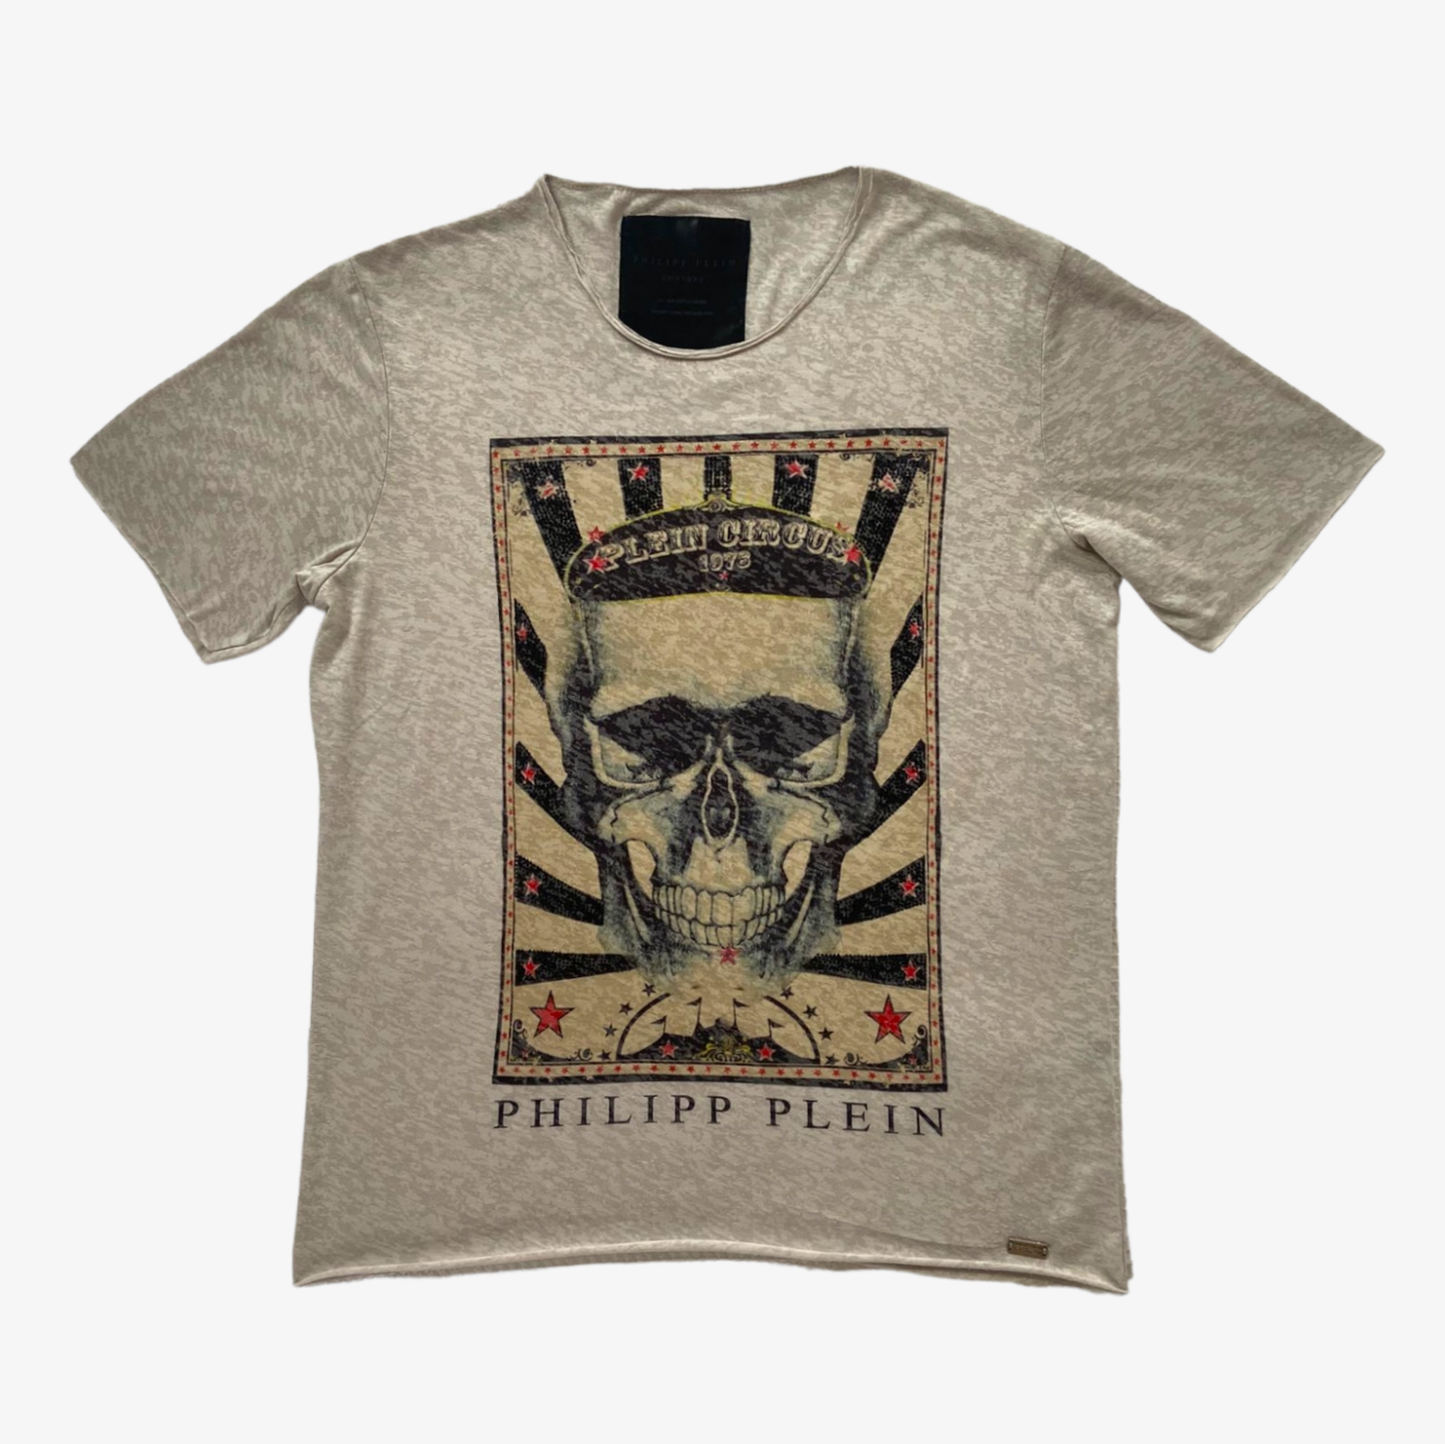 Philipp Plein Skull Print Limited Edition Top T-Shirt - Casspios Dream